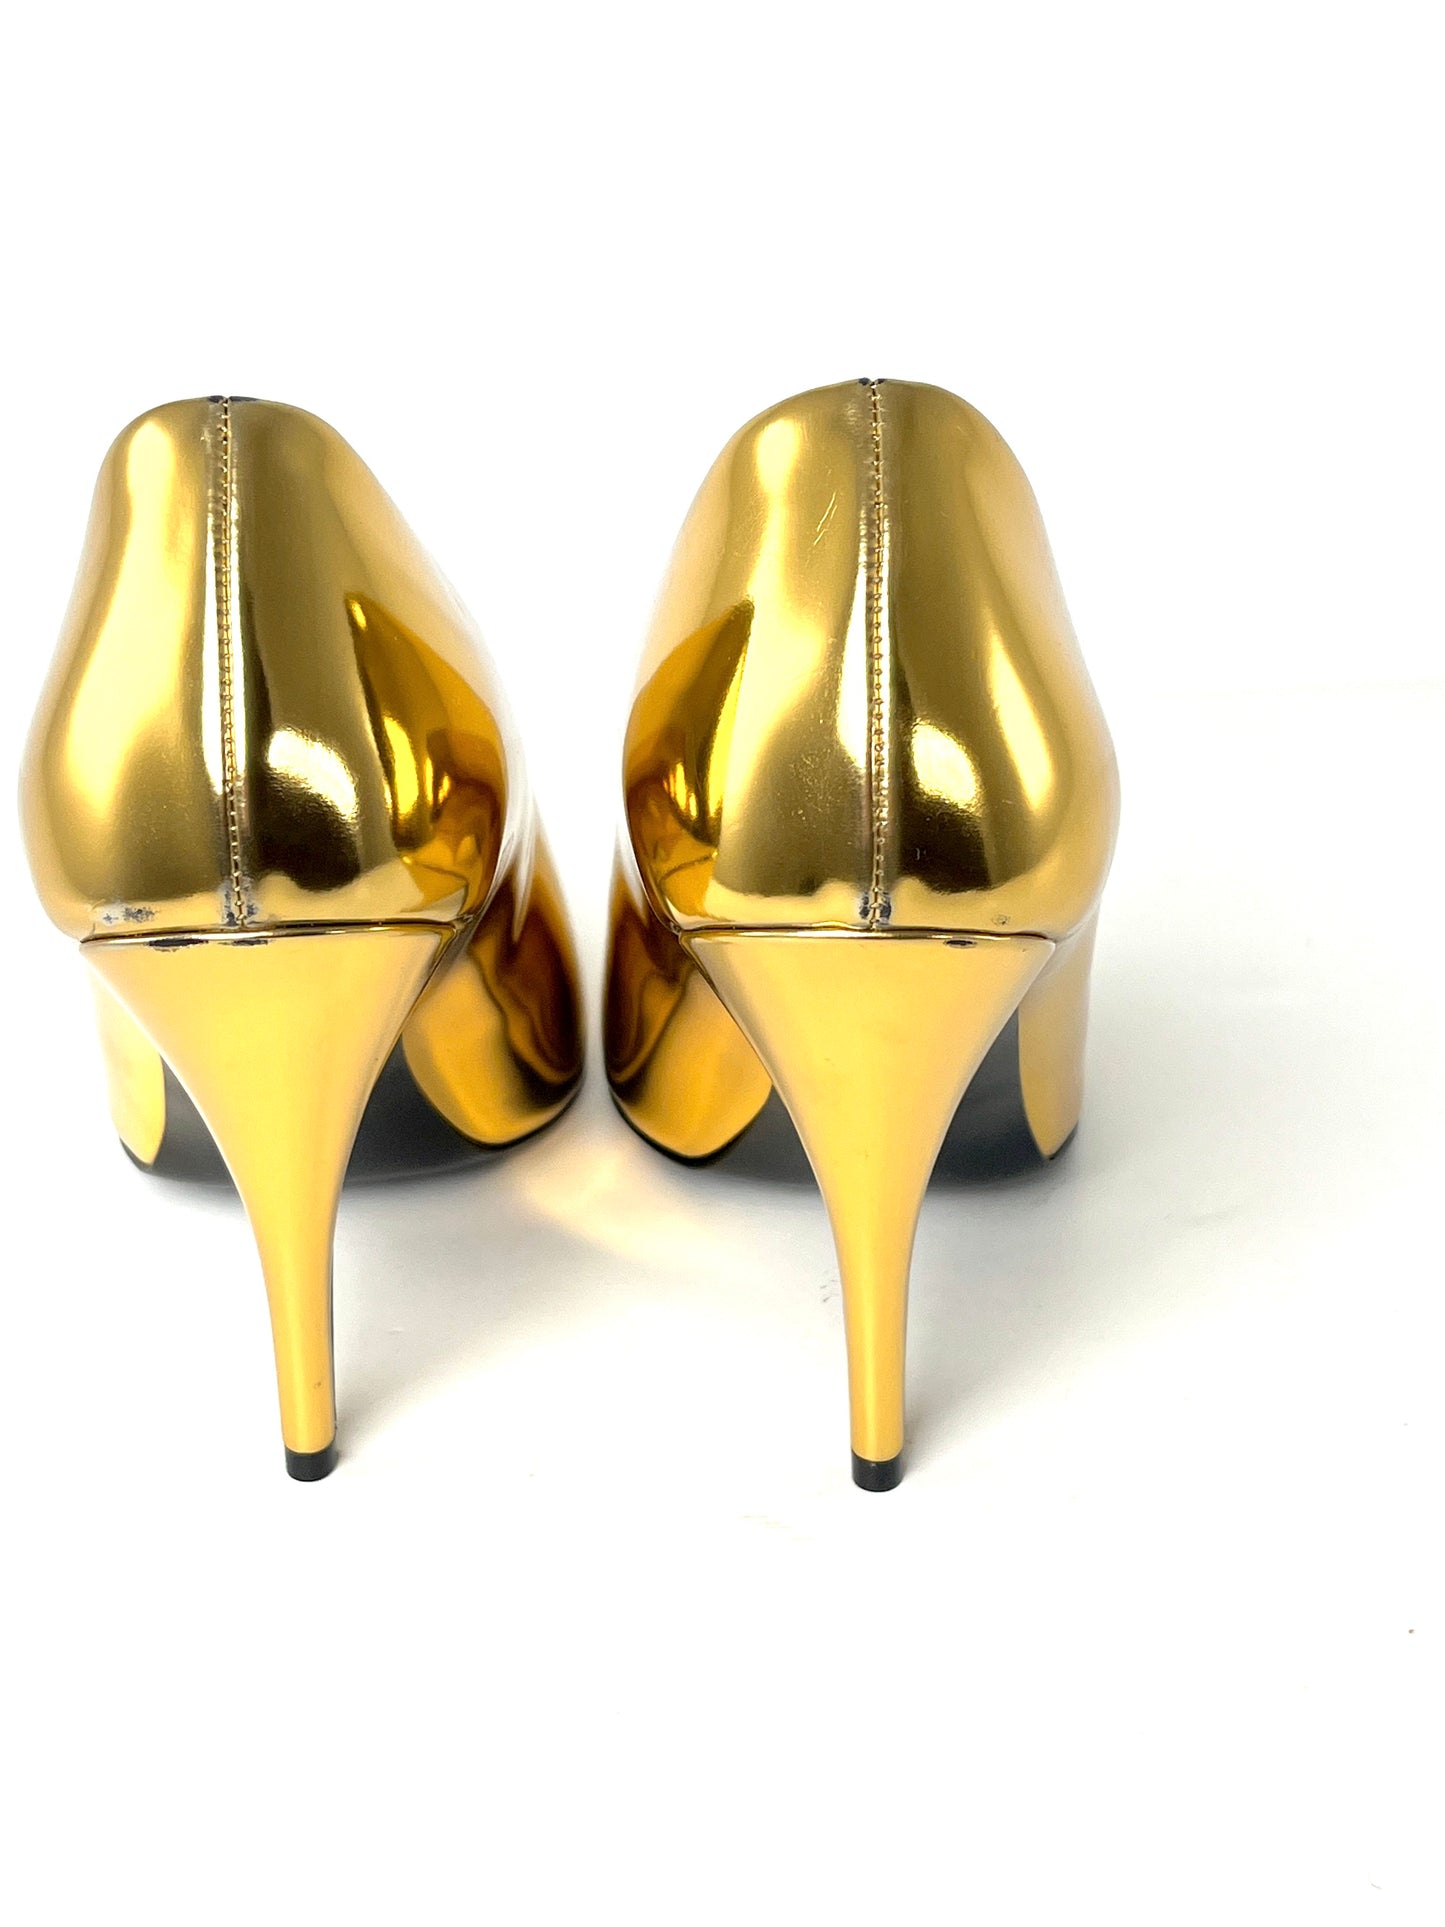 Stella McCartney Pointed Tow V Neck Metallic Gold Pumps Heels 38 7.5